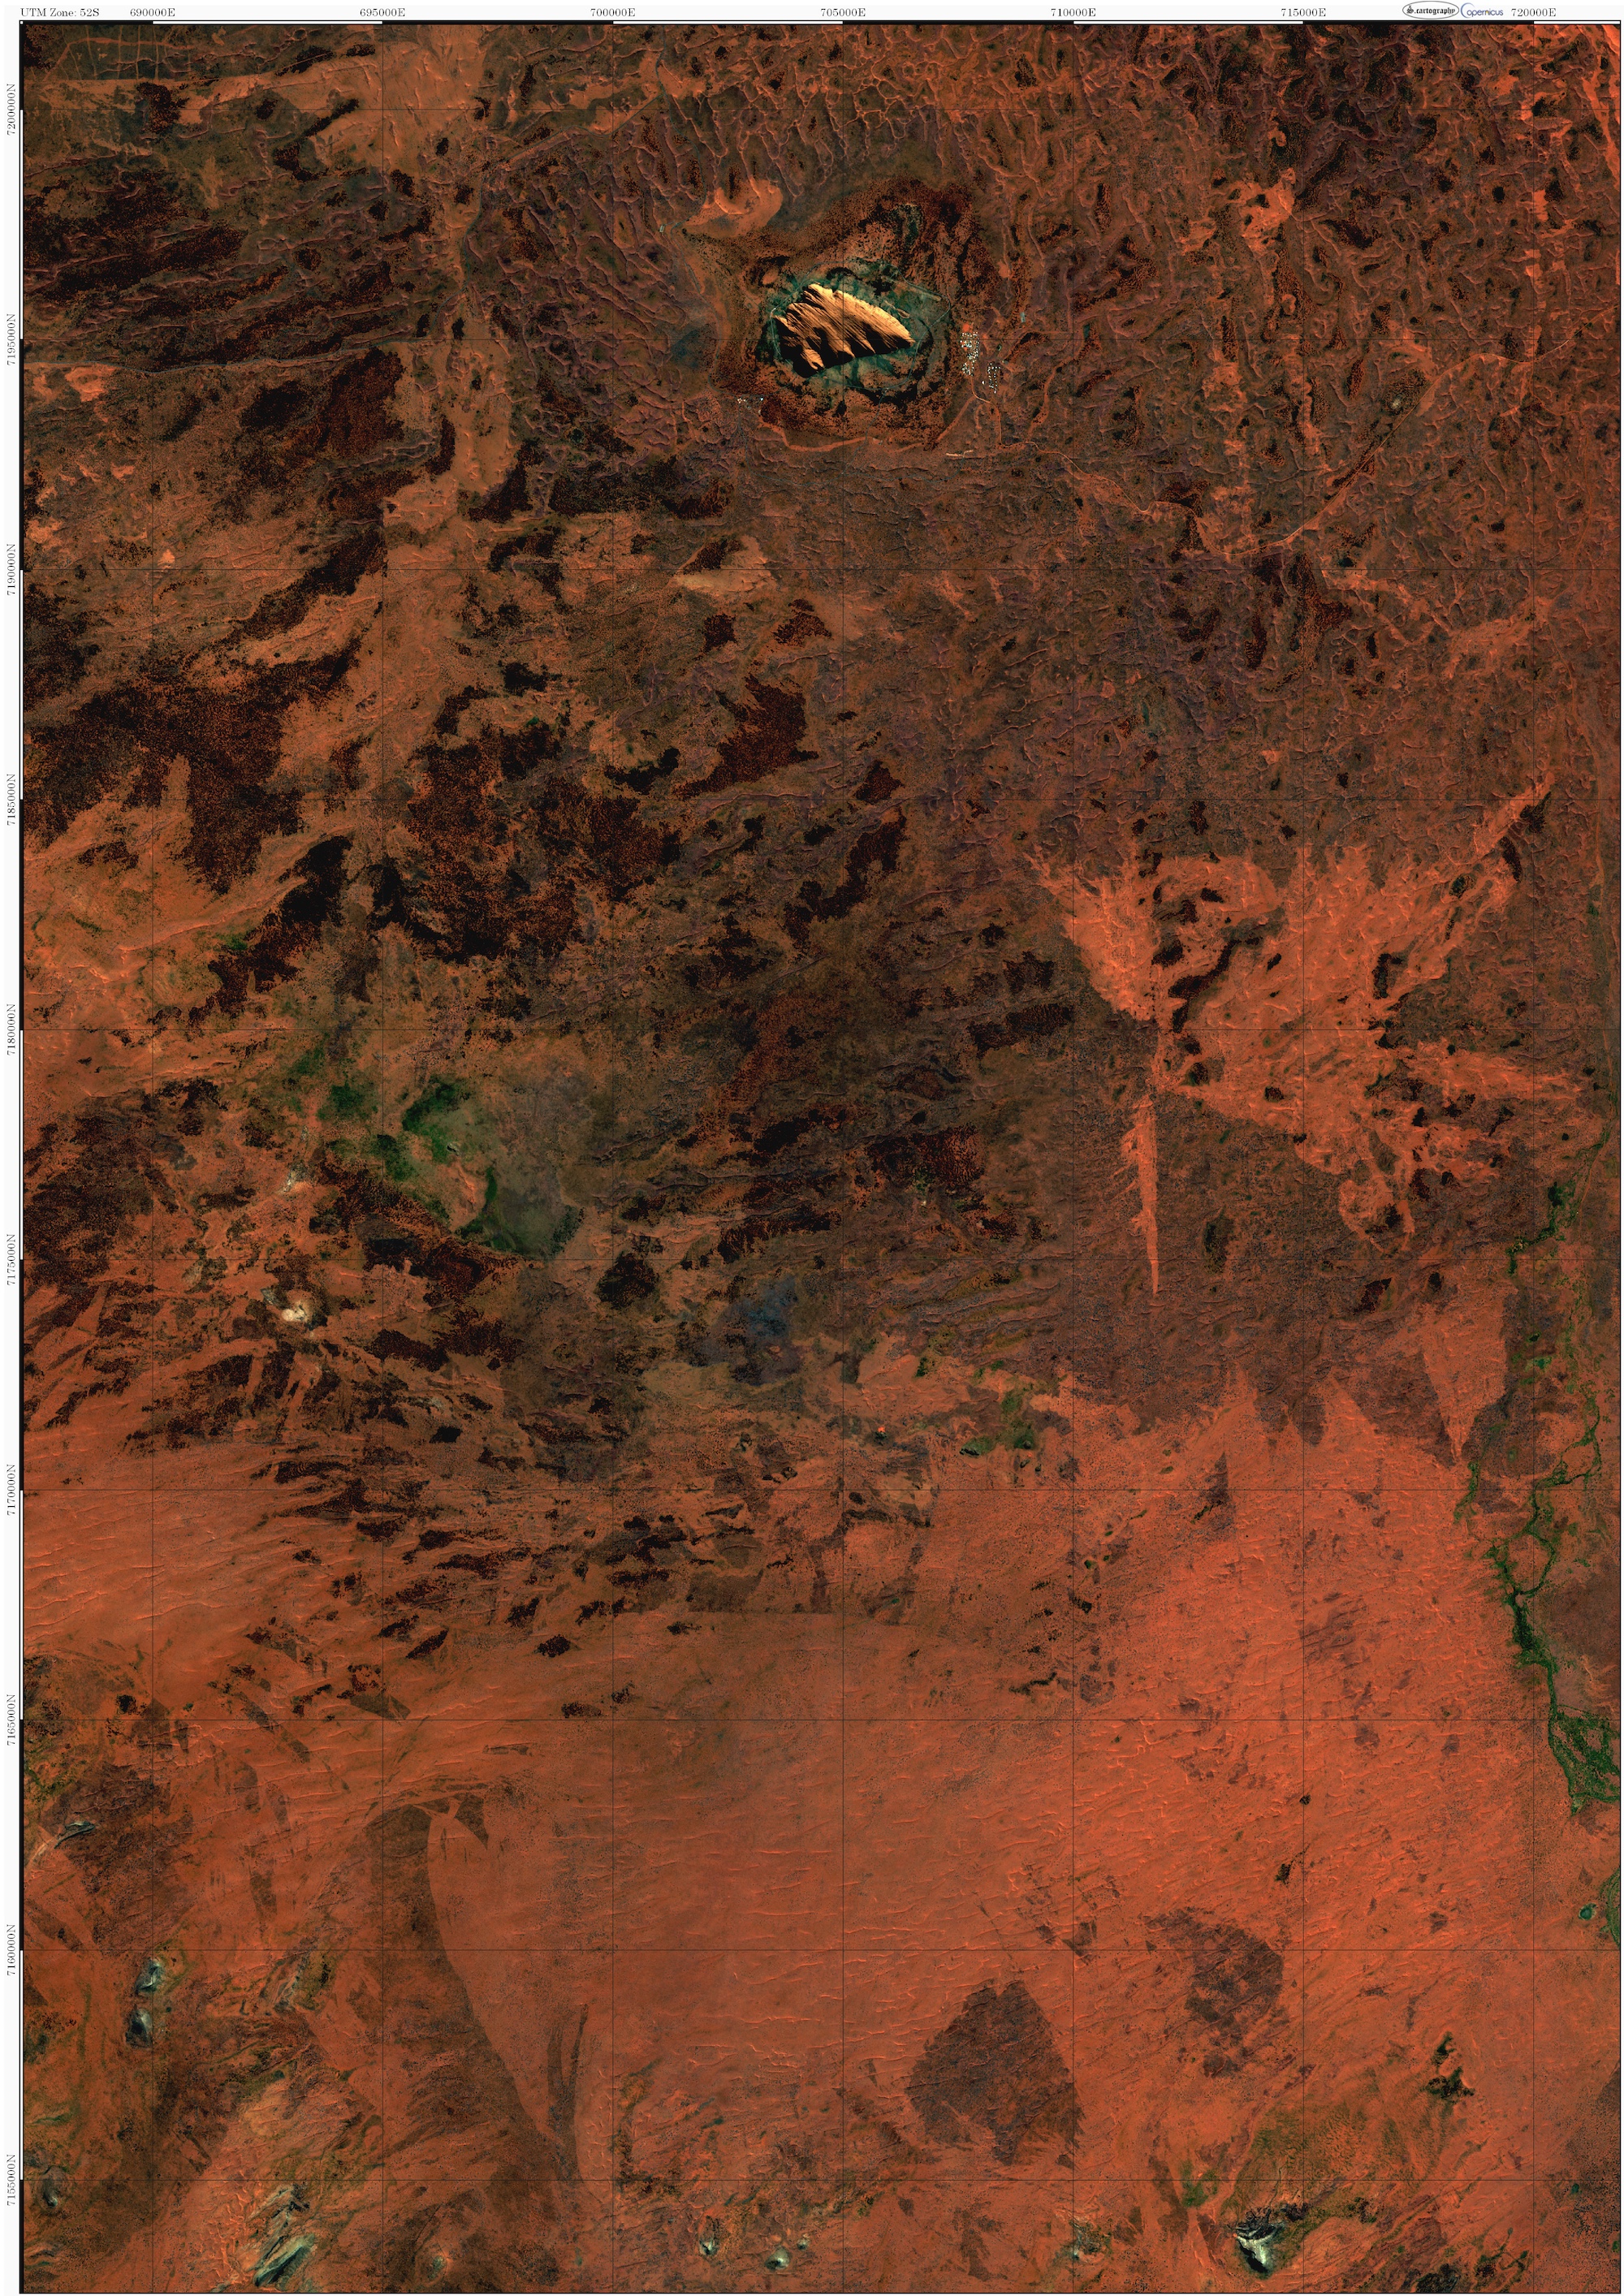 Australie - Ayers Rock / Uluru